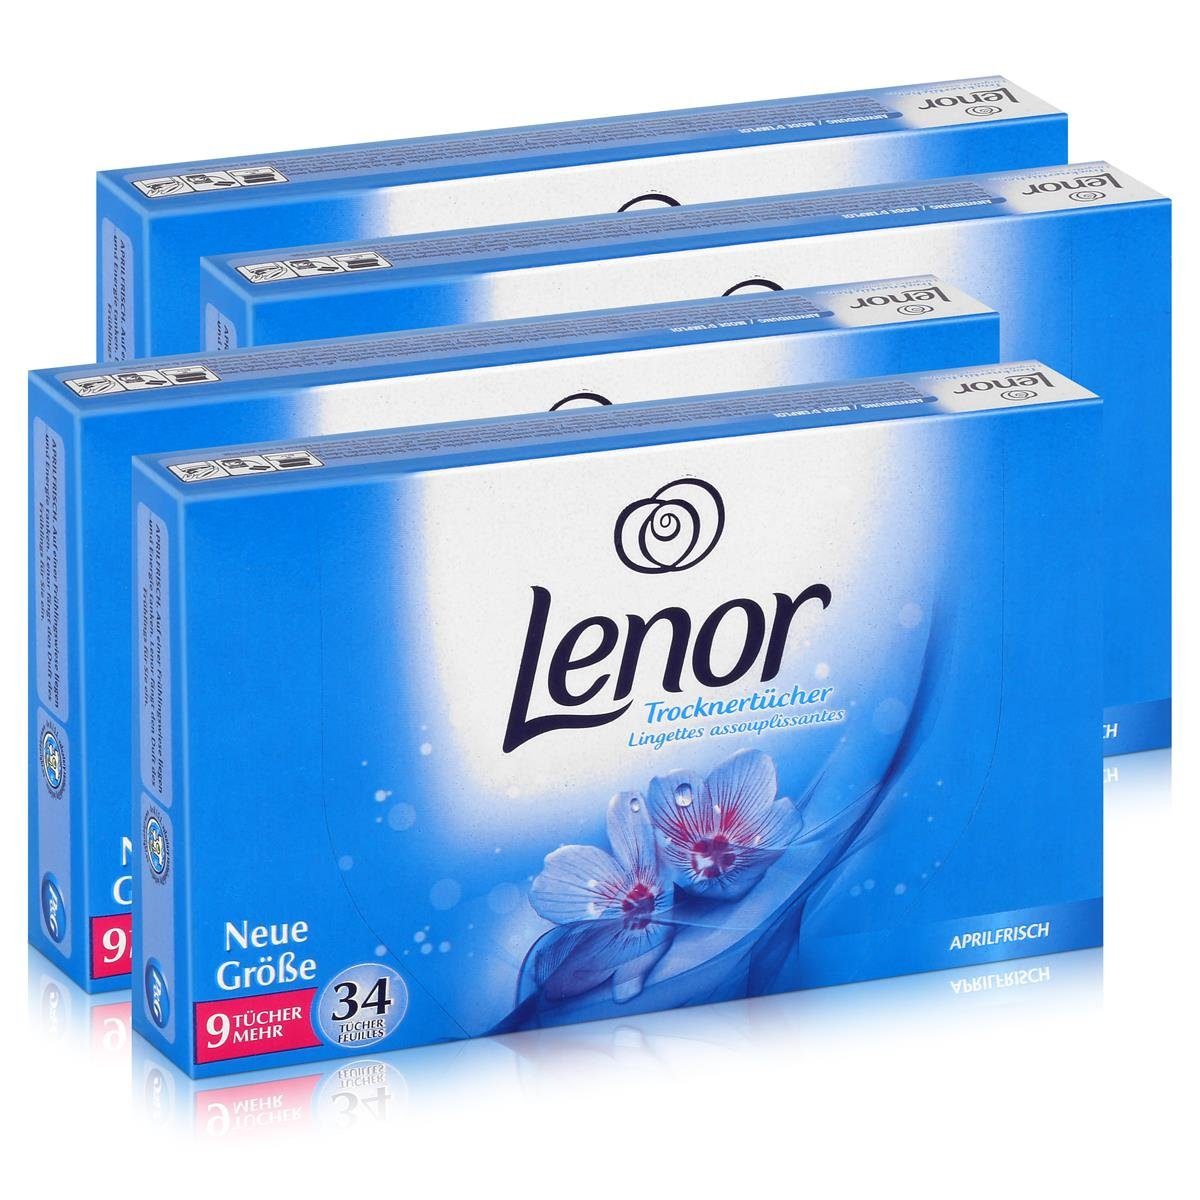 LENOR Lenor Trocknertücher Spezialwaschmittel Wäschepflege 34 Trockner Tücher - Aprilfrisch im